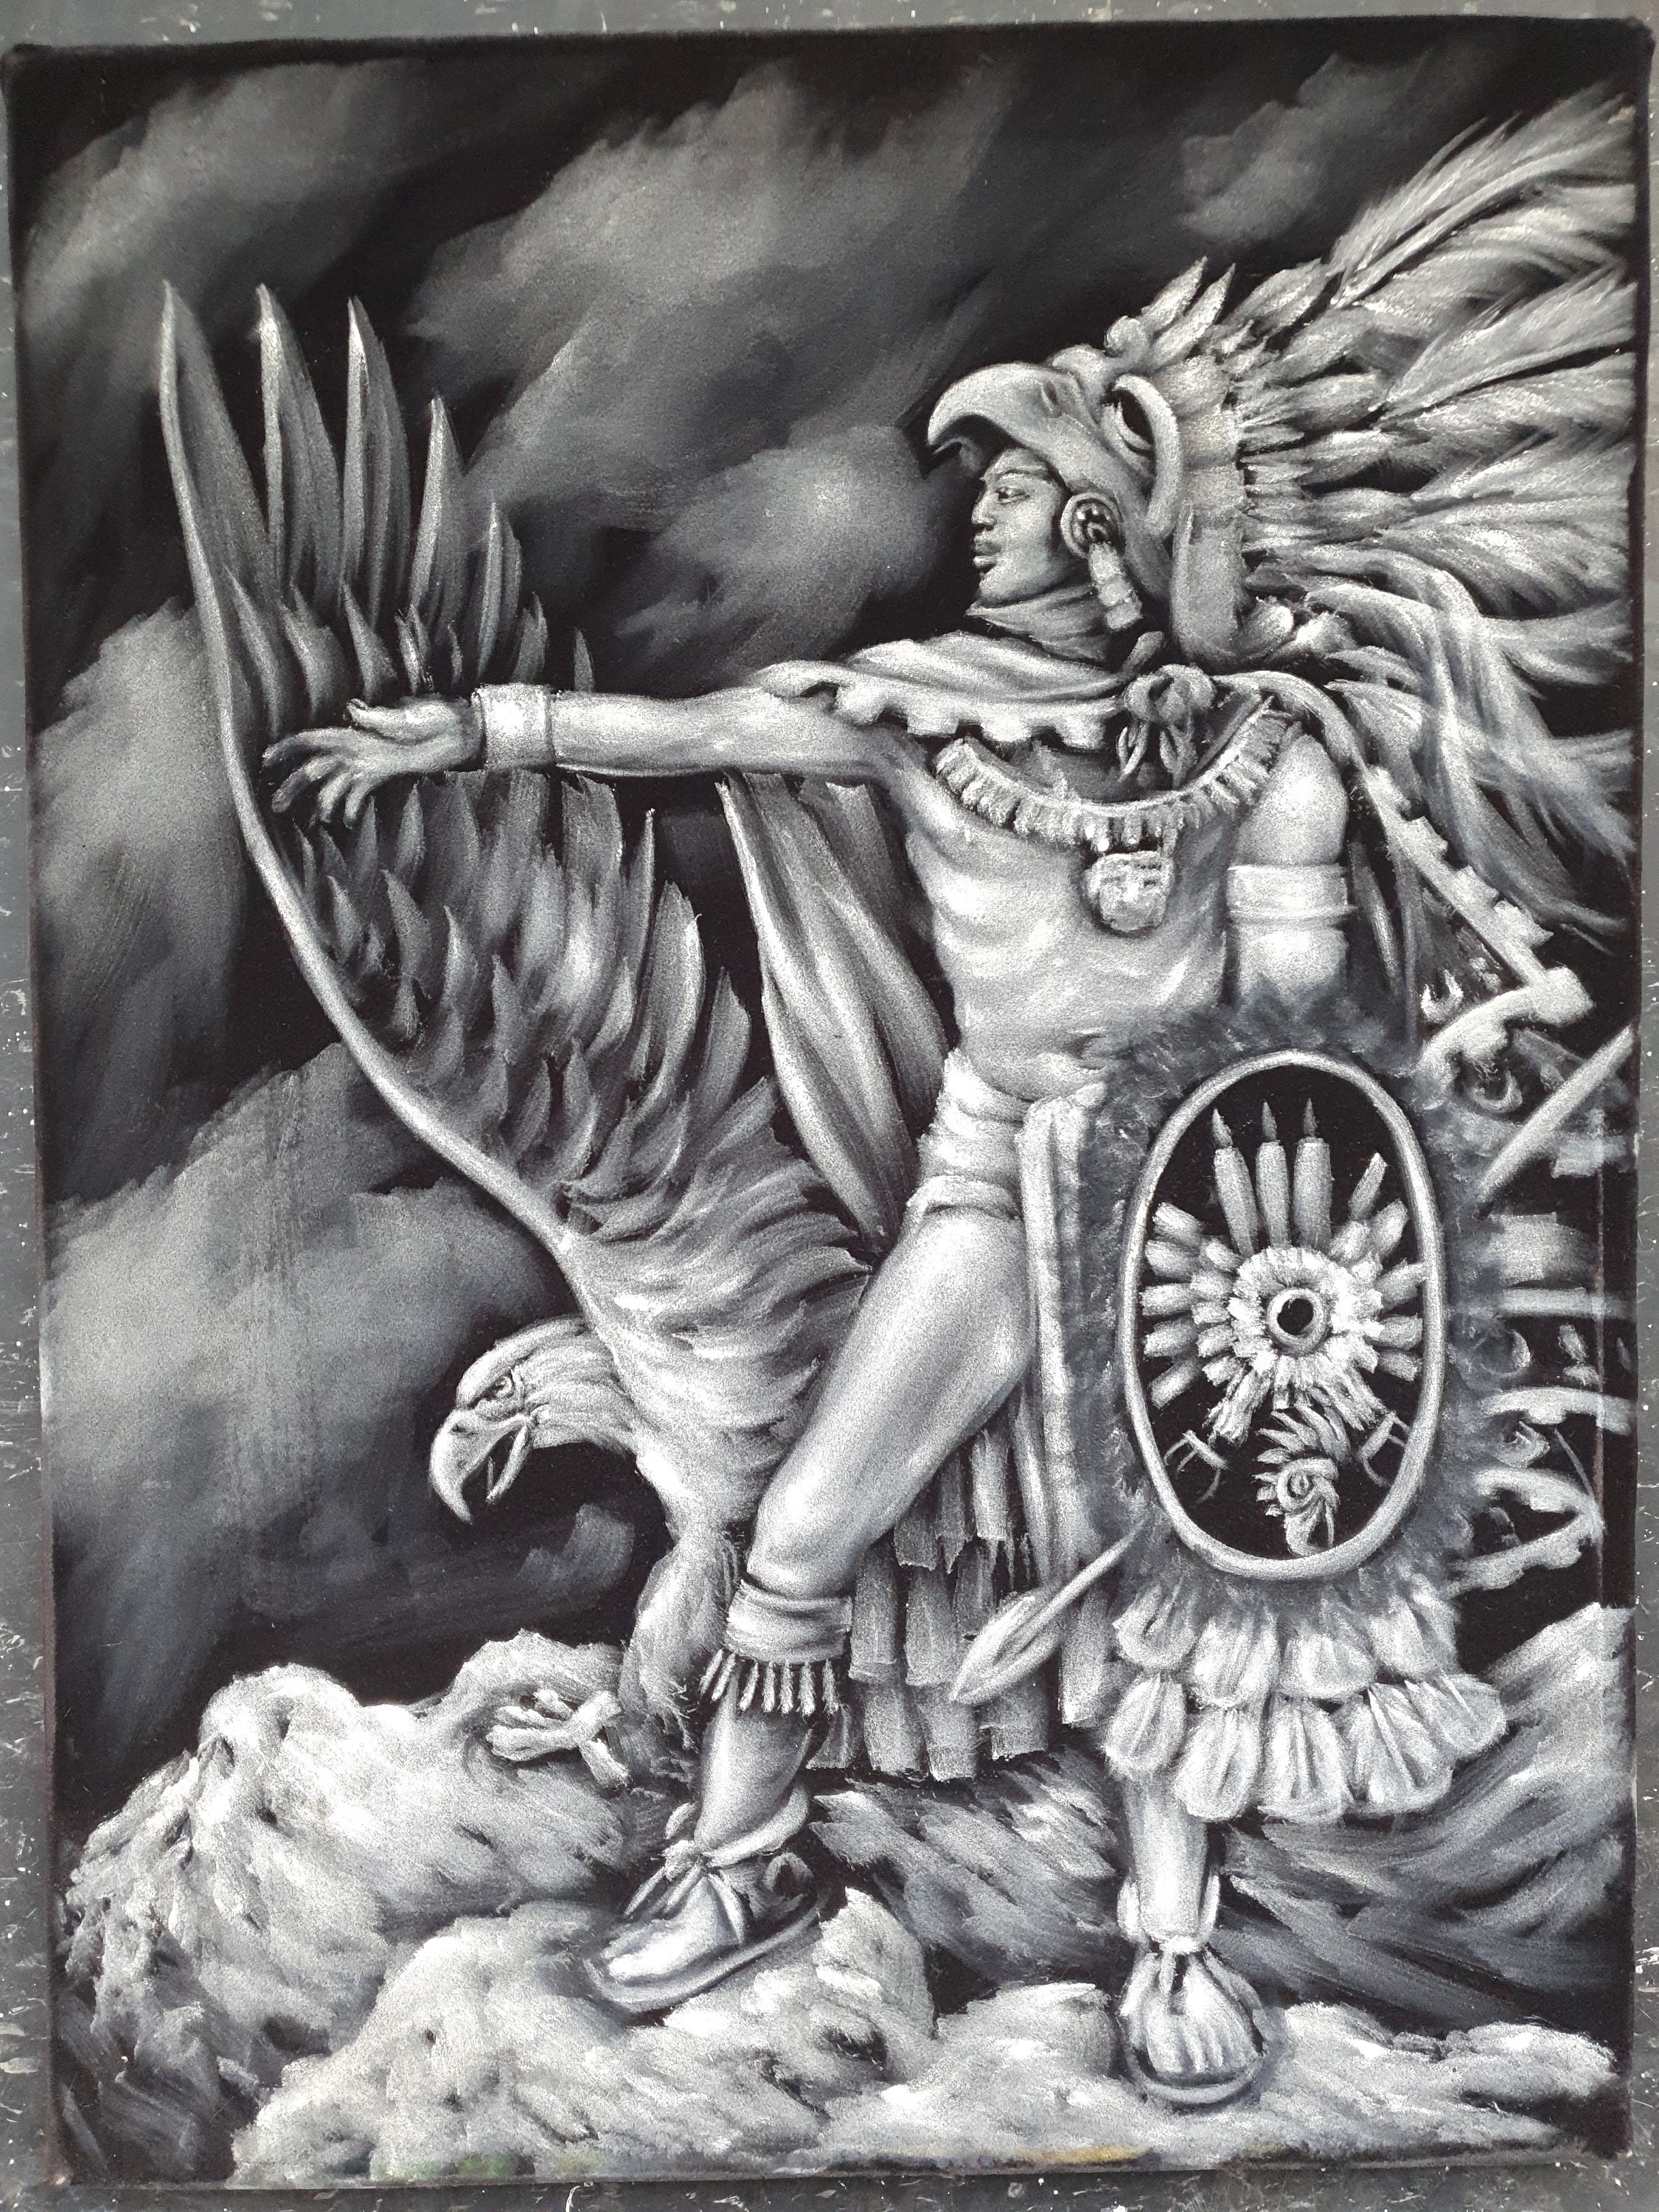 Guerrero águila azteca: Pintura al óleo original sobre - Etsy México